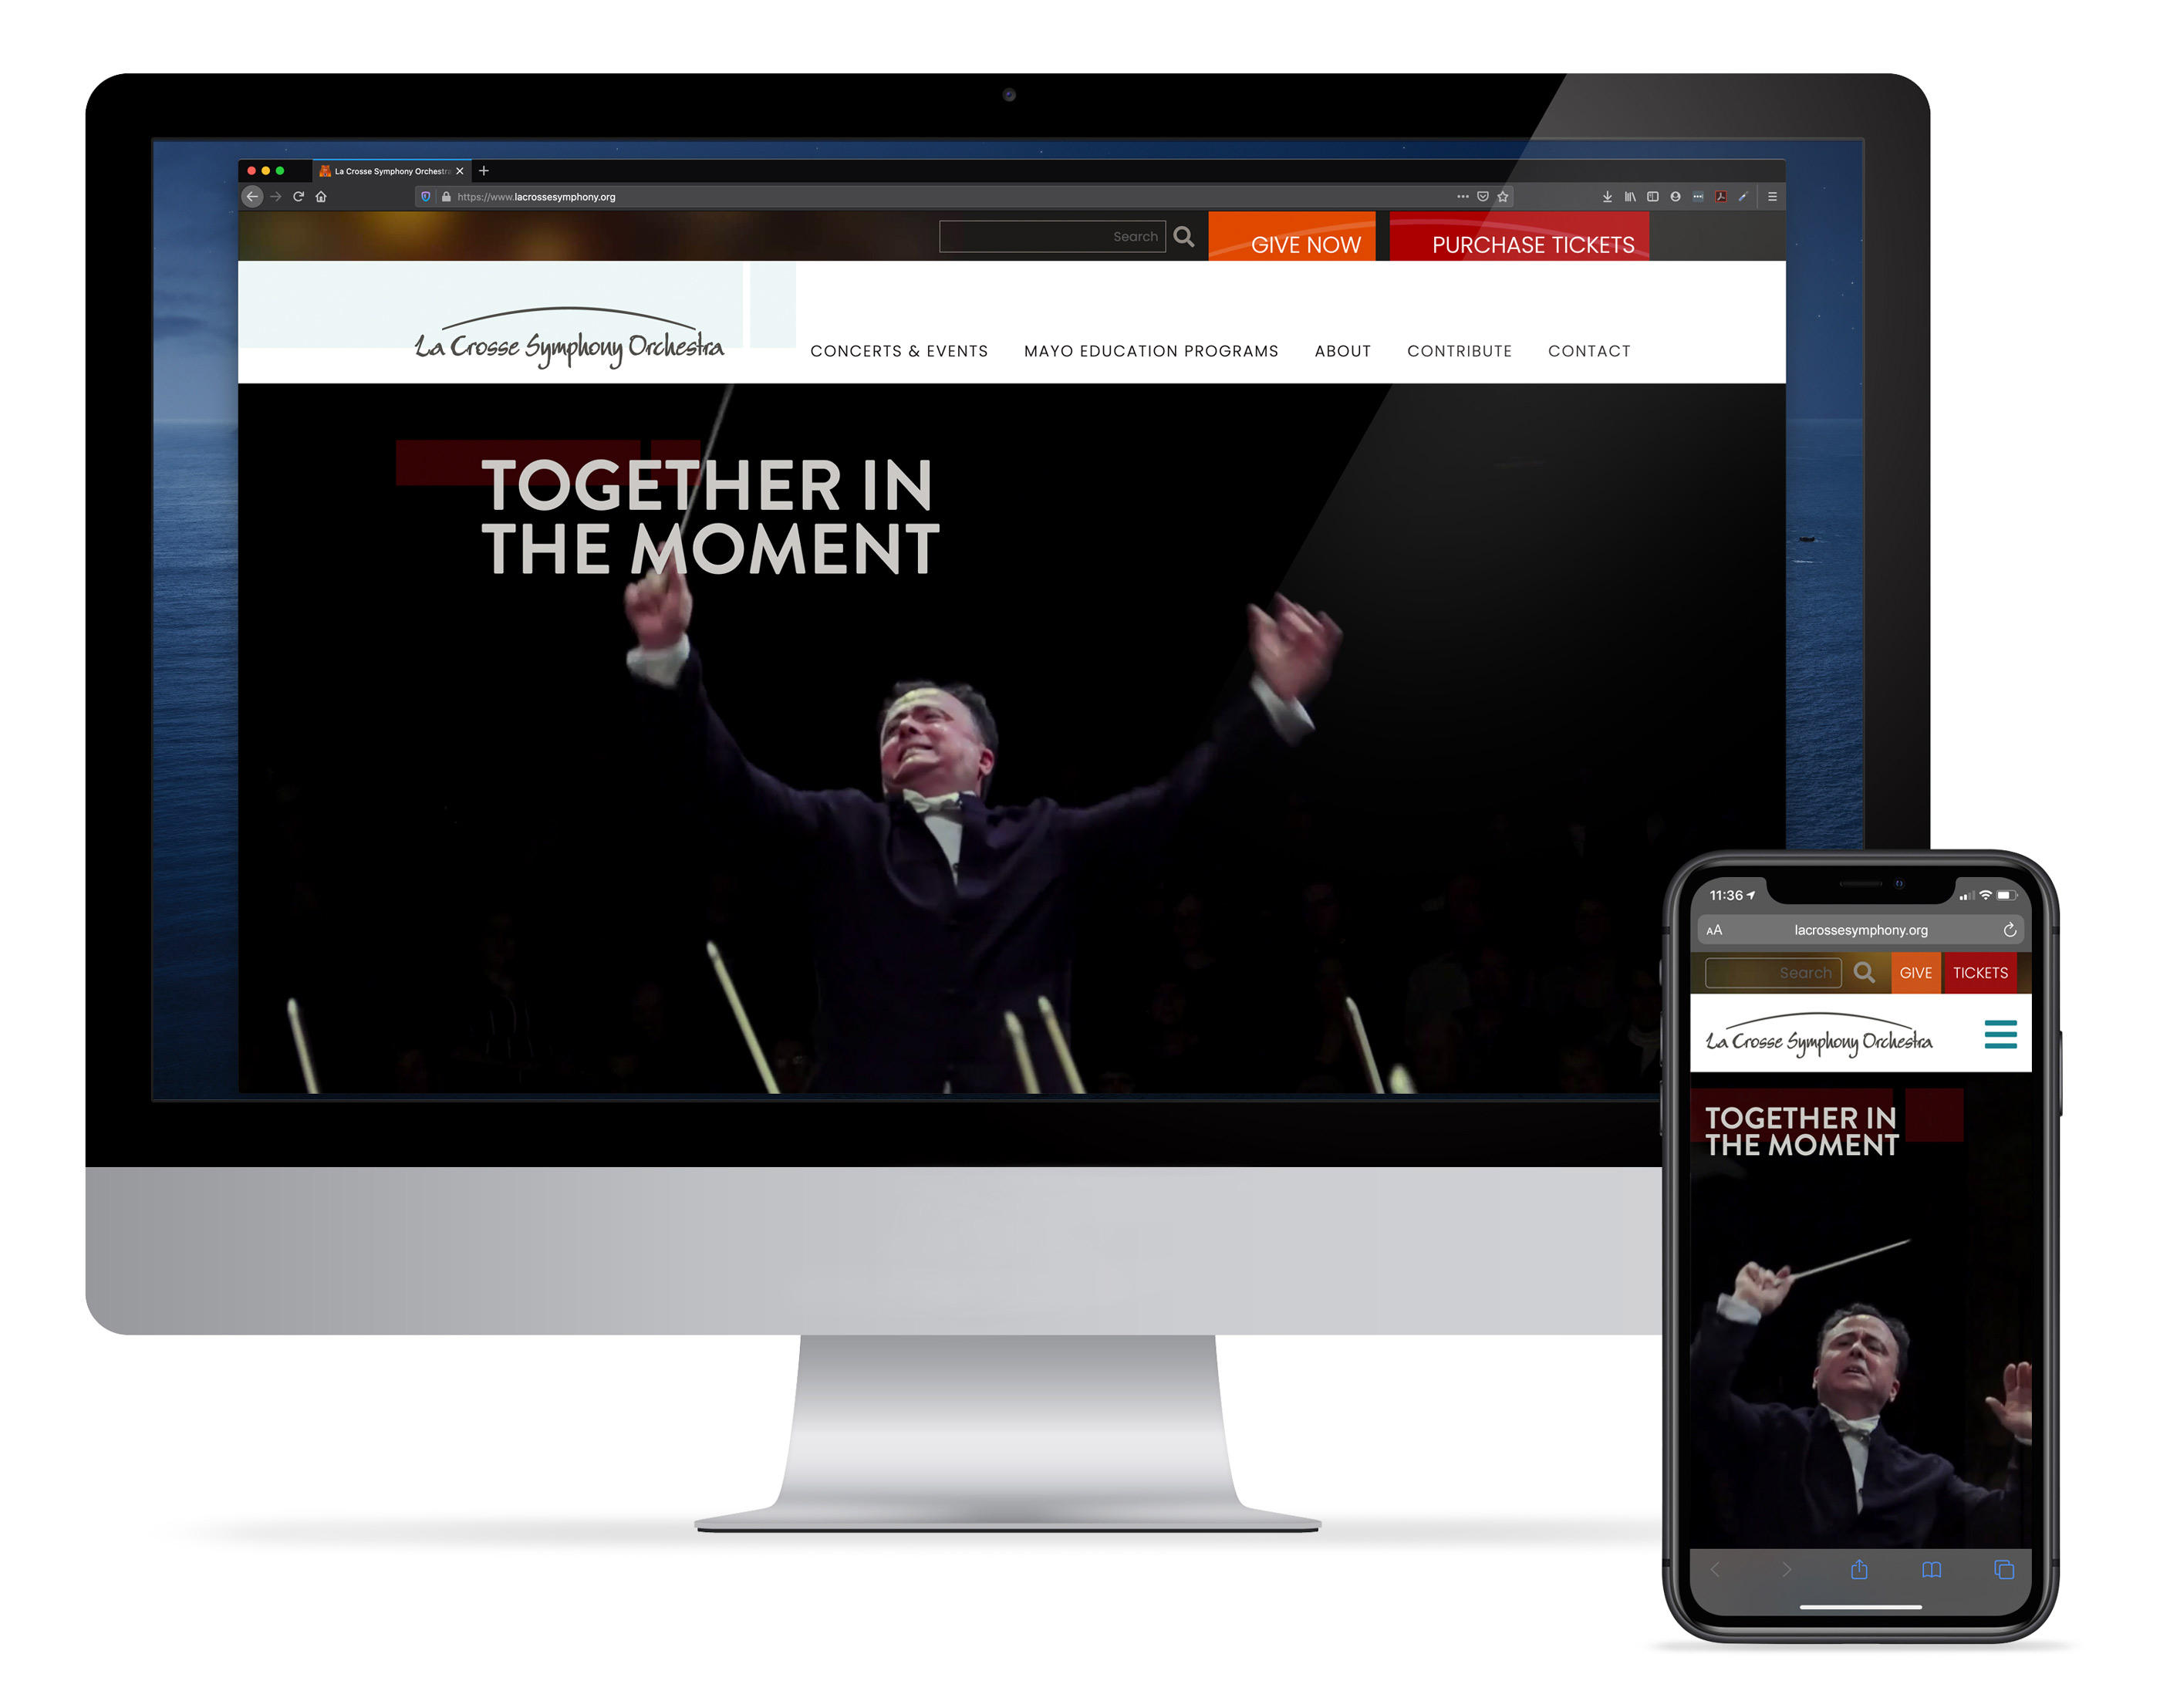 lax symphony orchestra web screens